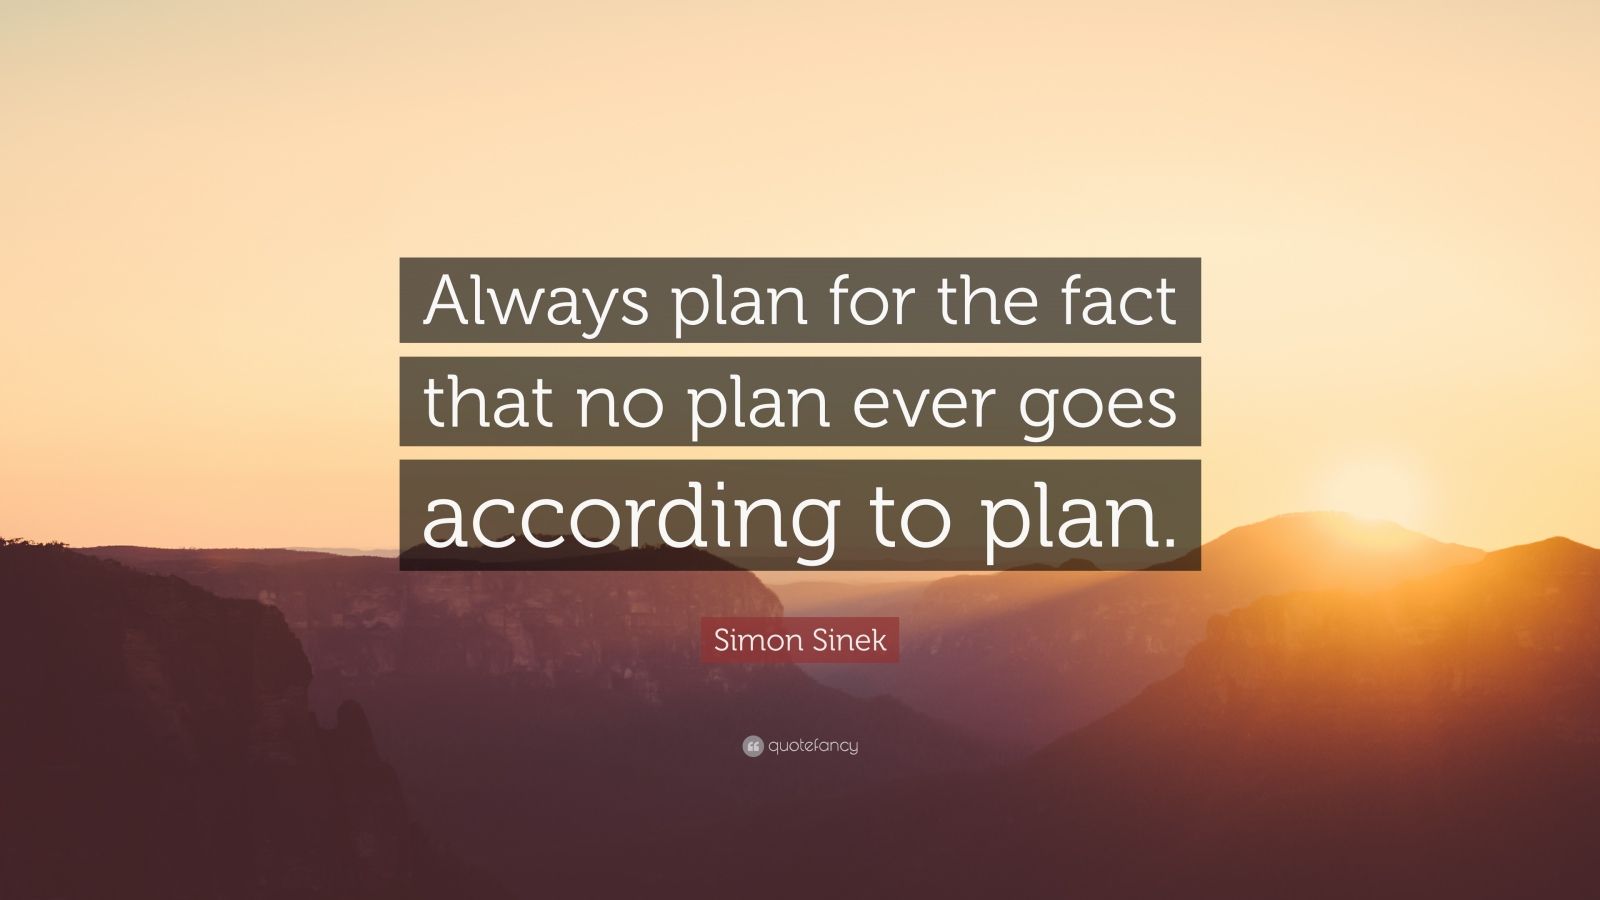 Simon Sinek Quote “Always plan for the fact that no plan